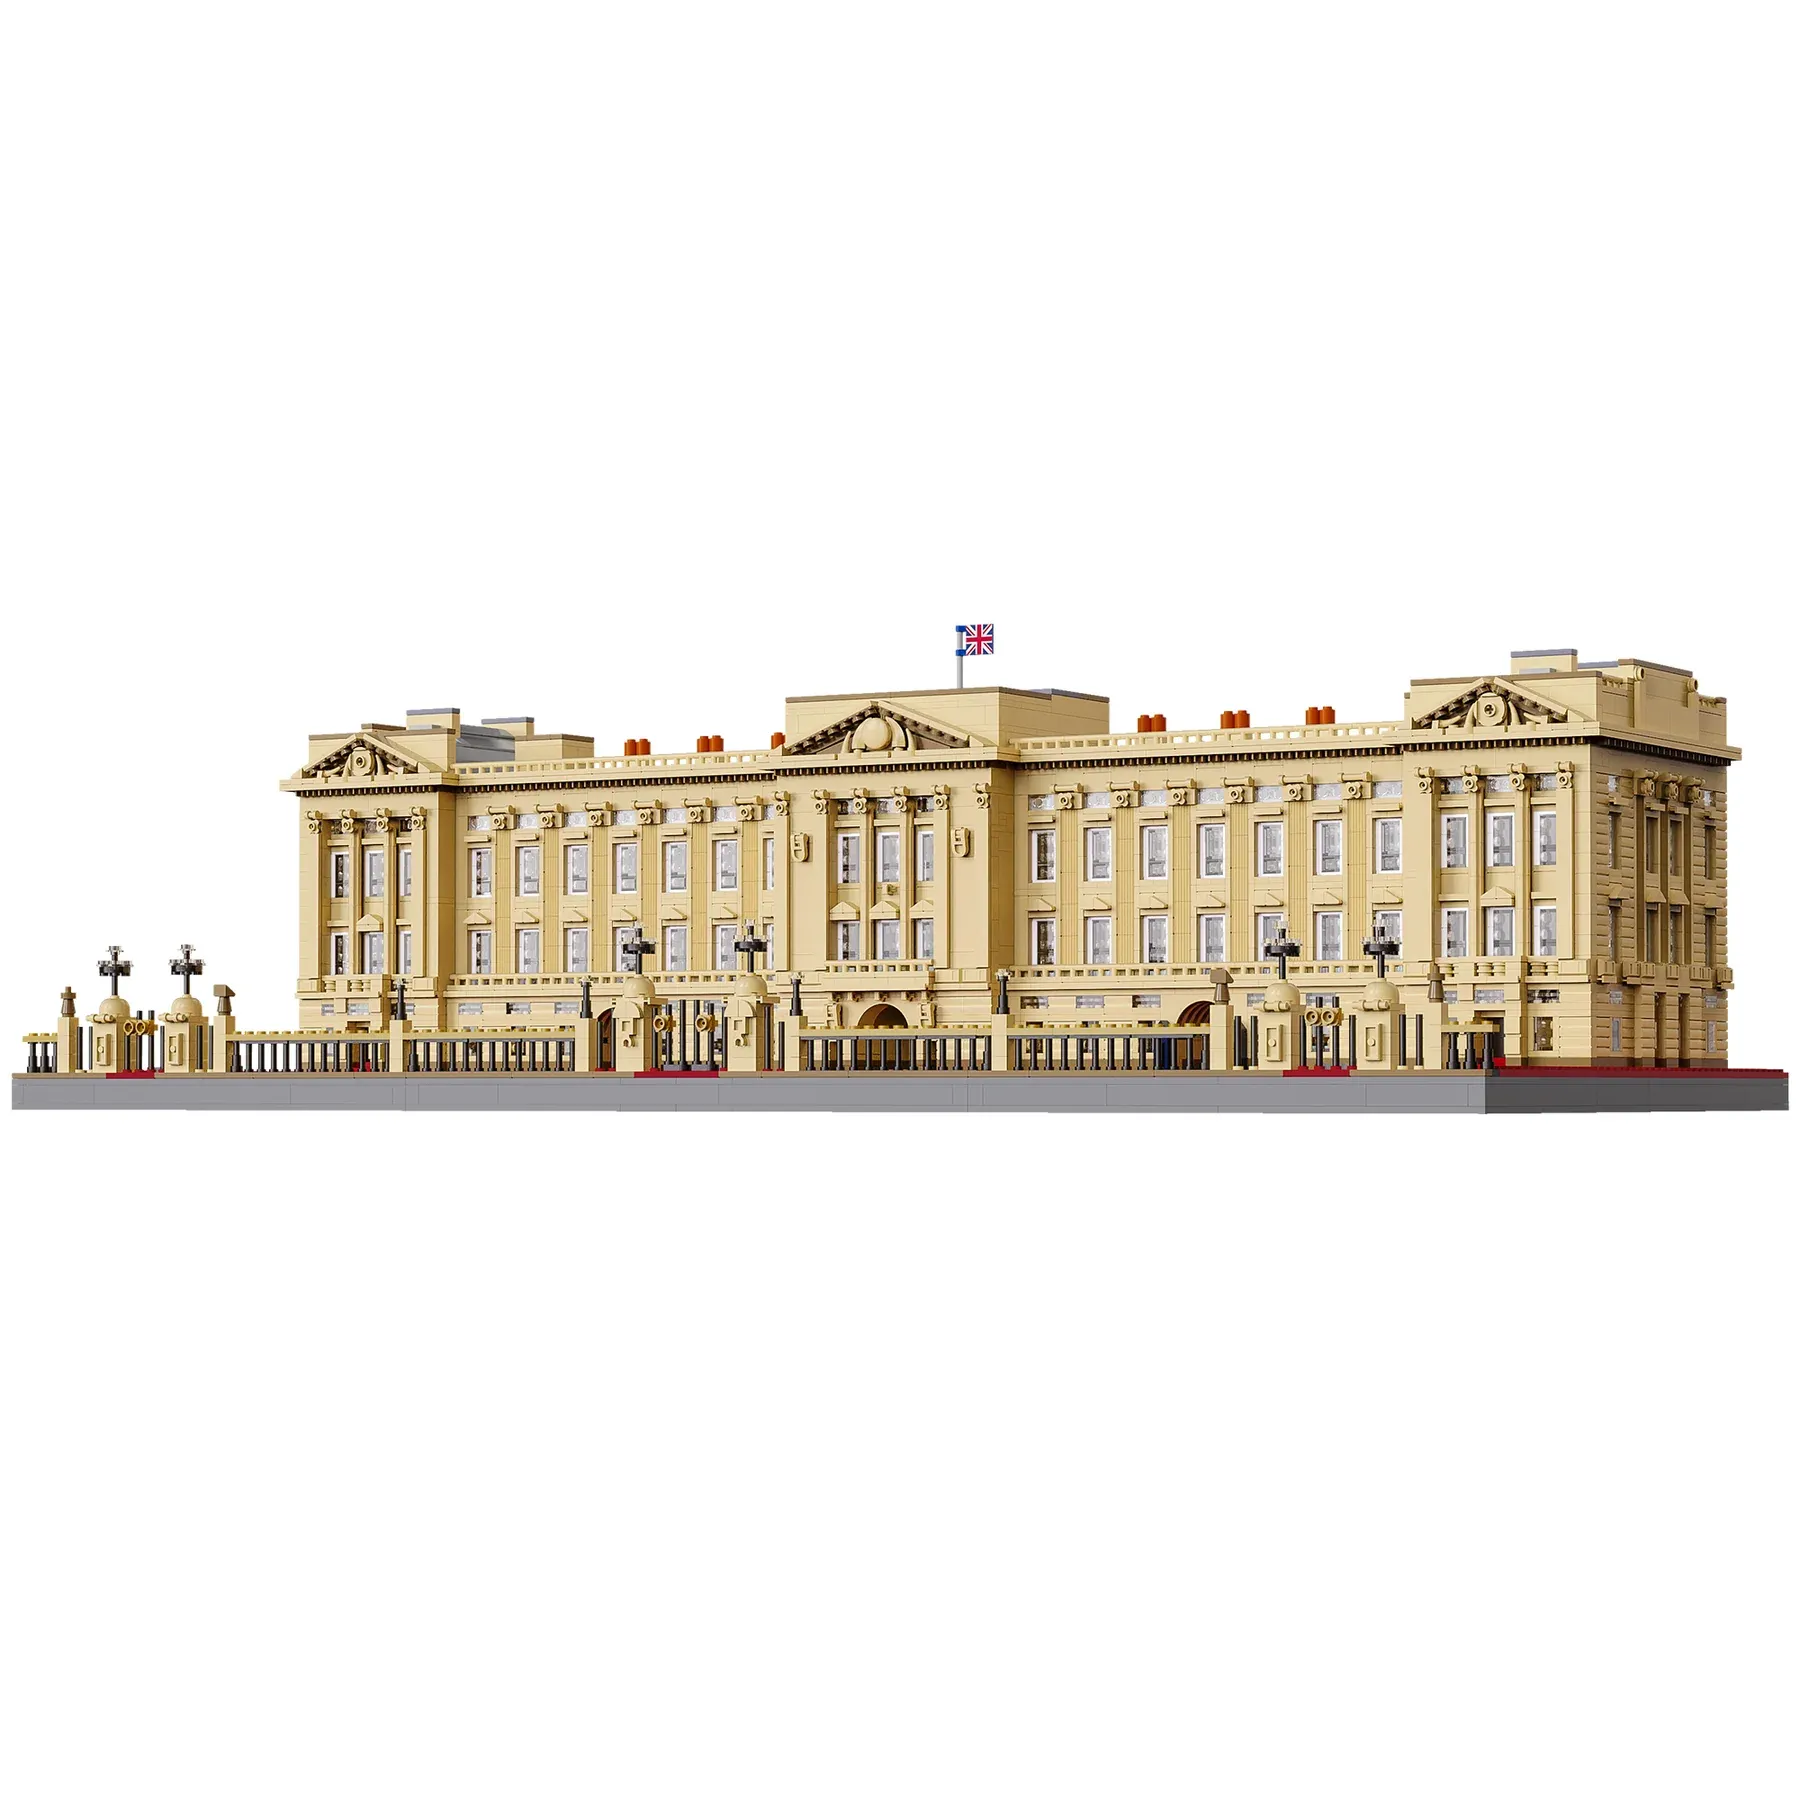 Buckingham Palace Gallery